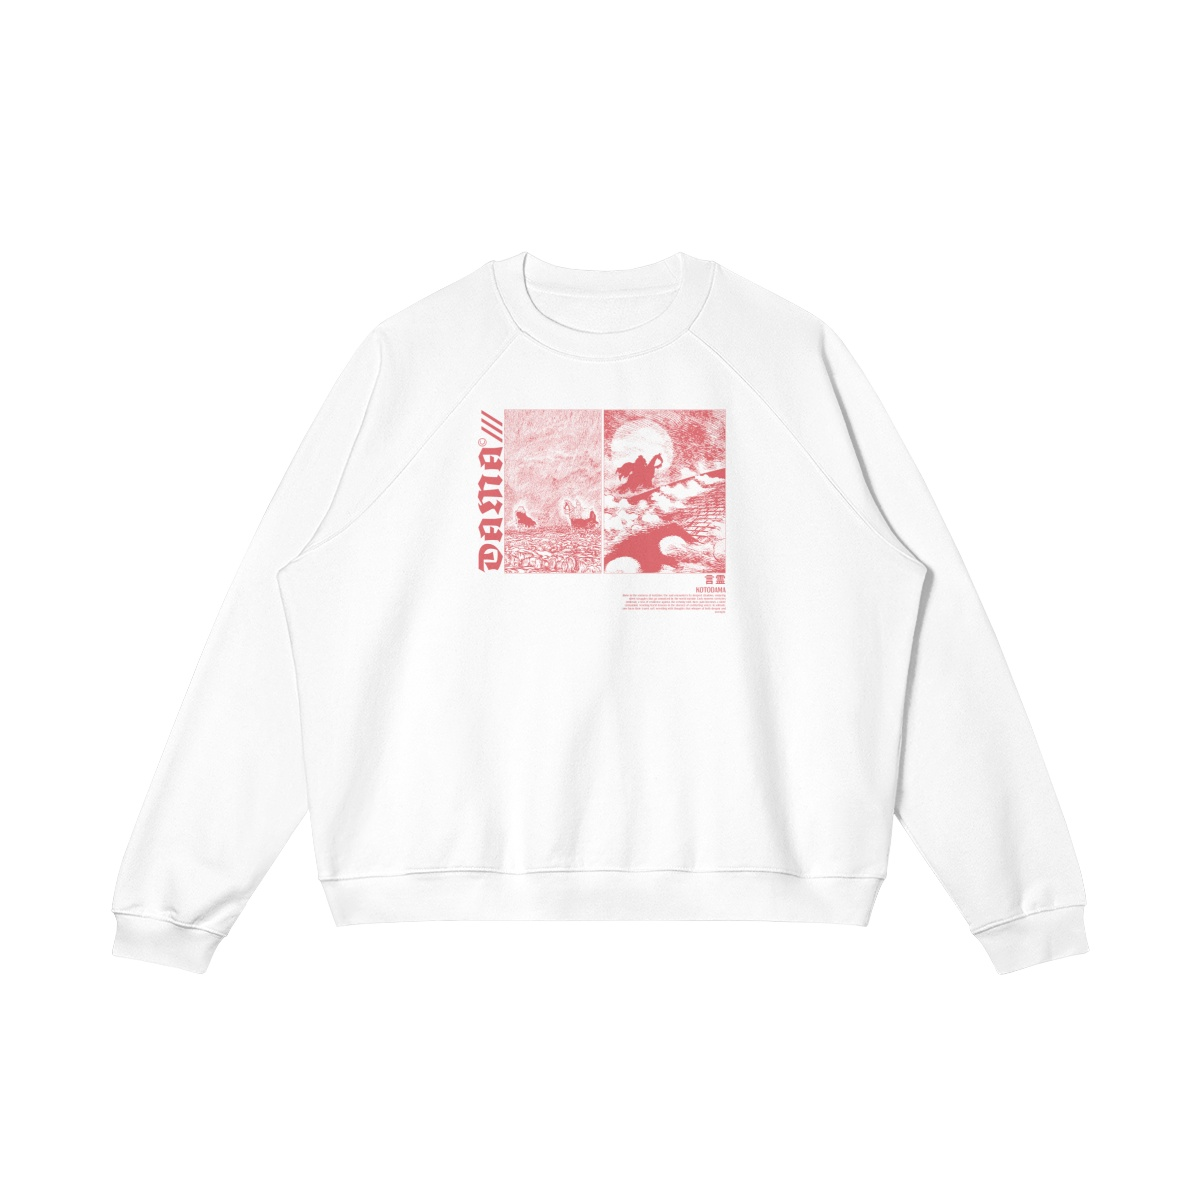 Berserk Sweatshirt | Shop Limited Edition Anime Inspired Sweatshirt